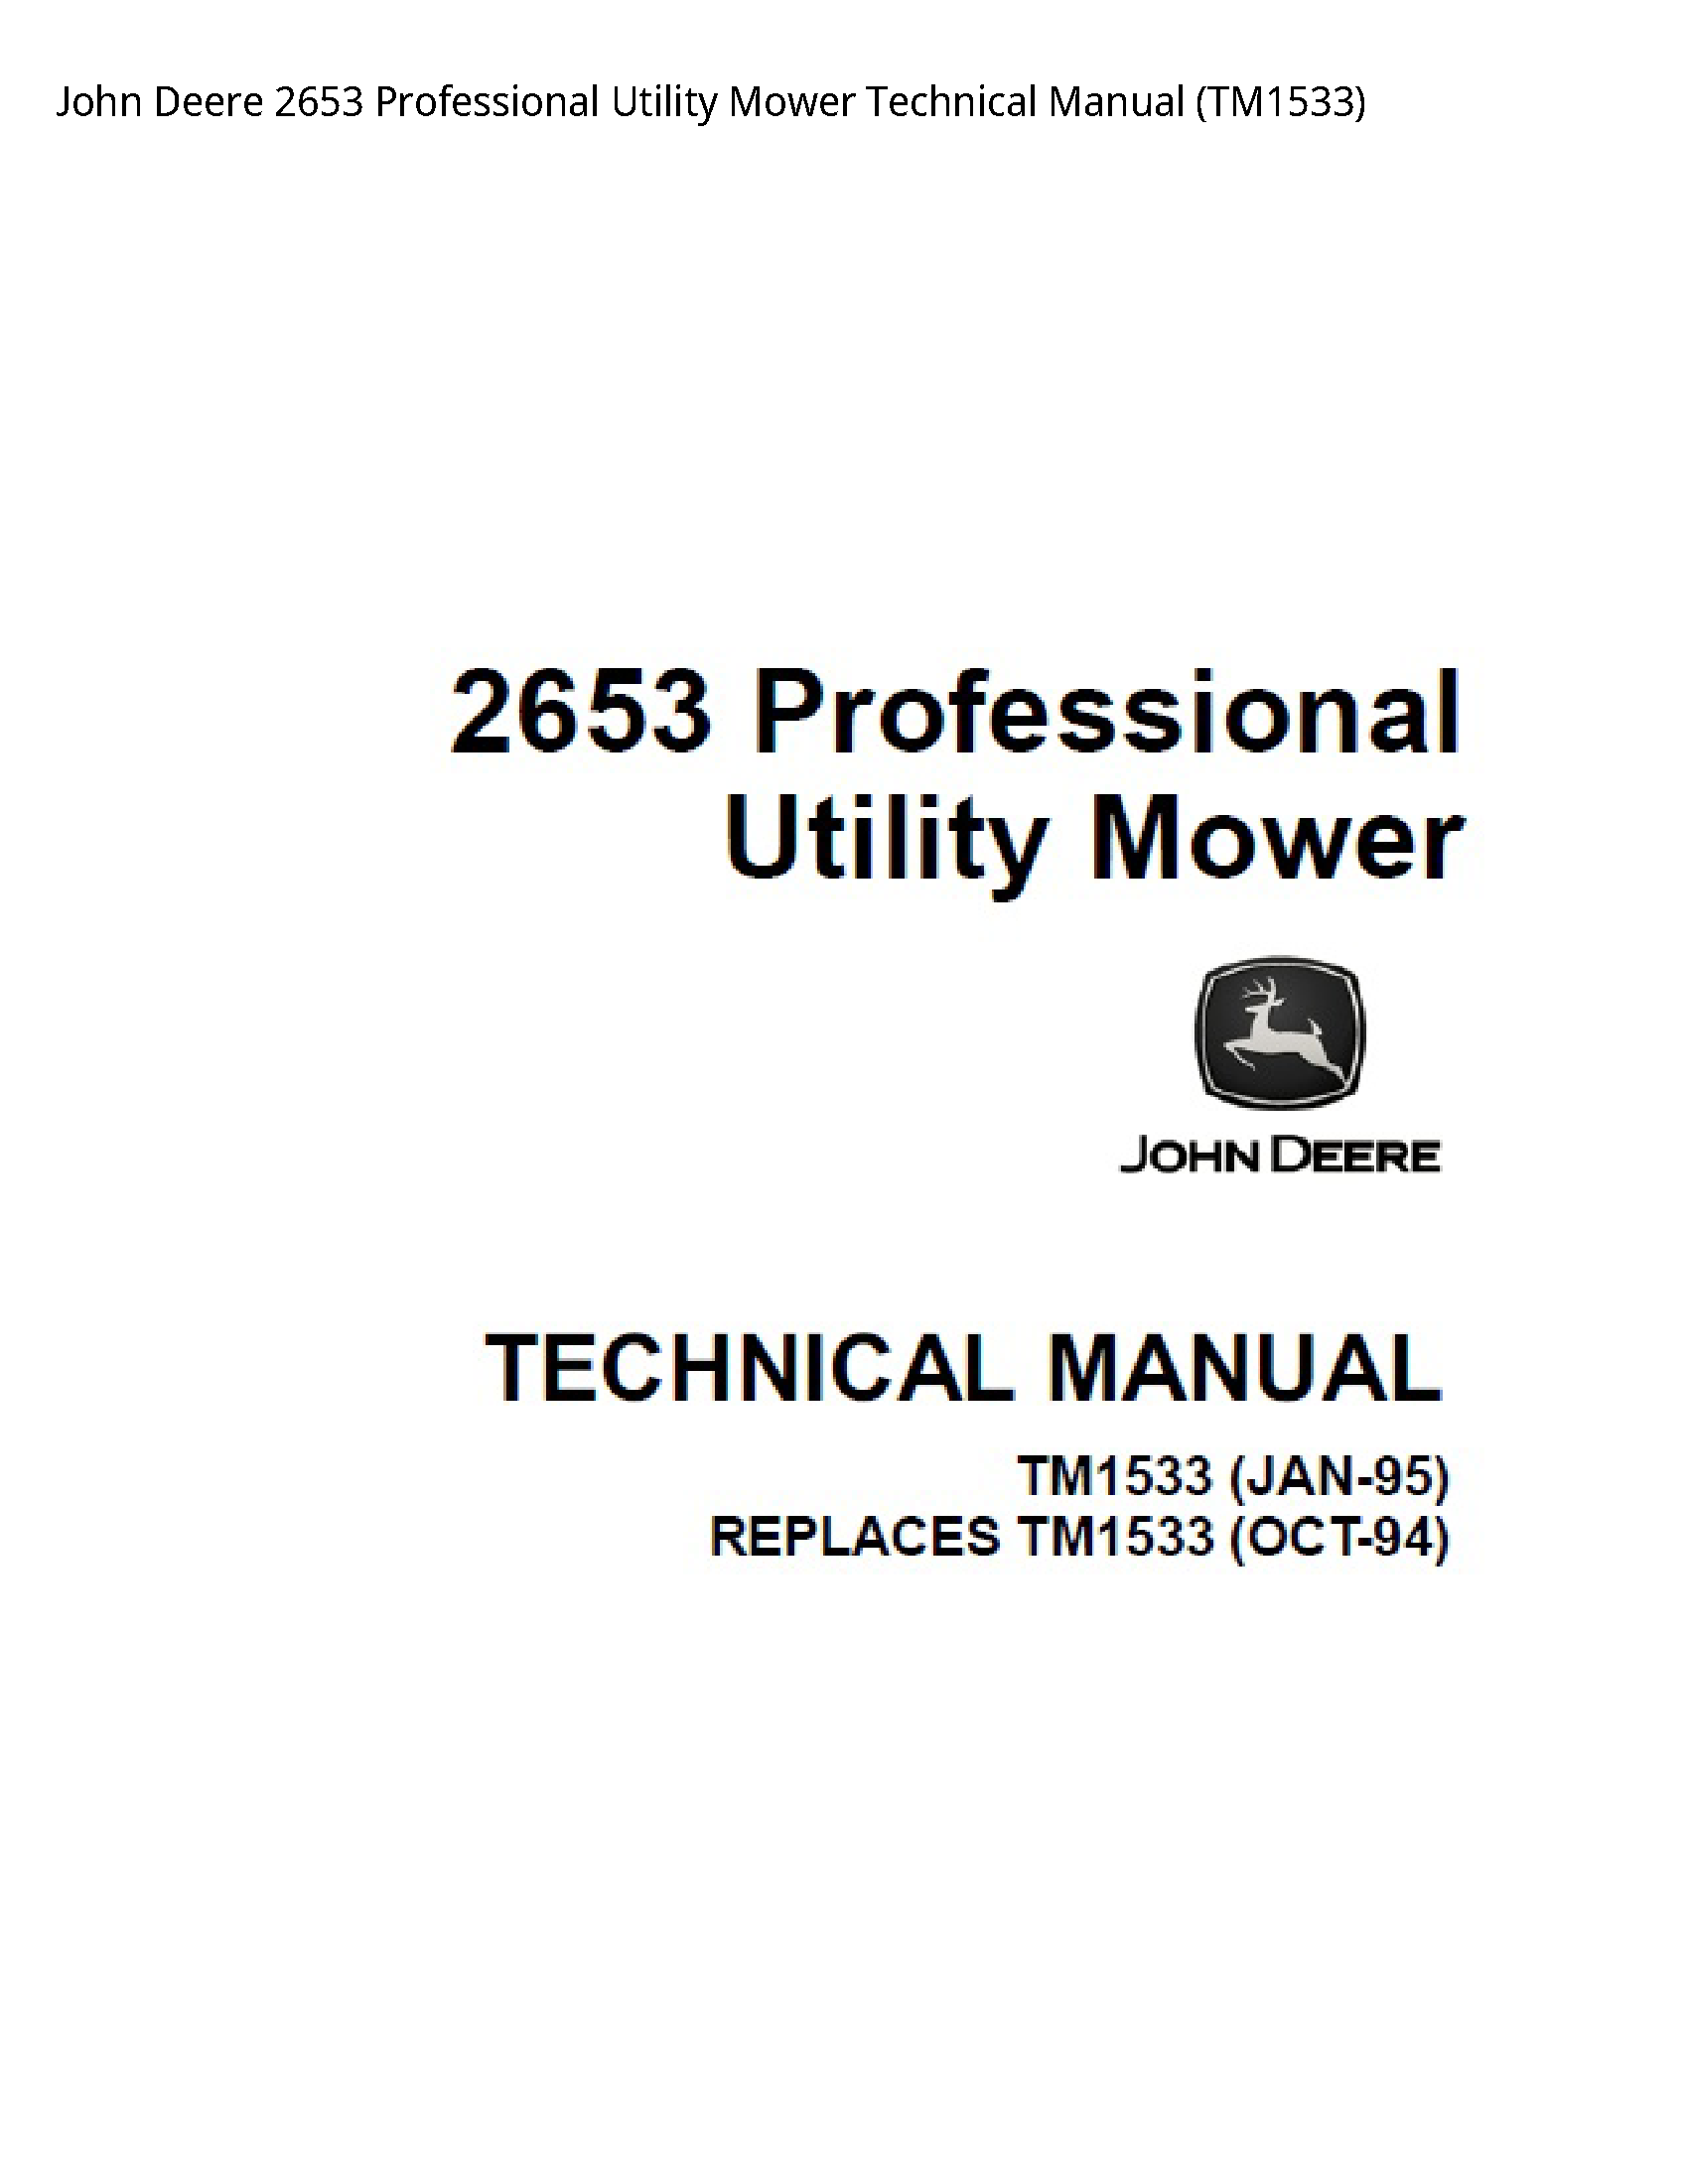 John Deere 2653 Professional Utility Mower Technical manual